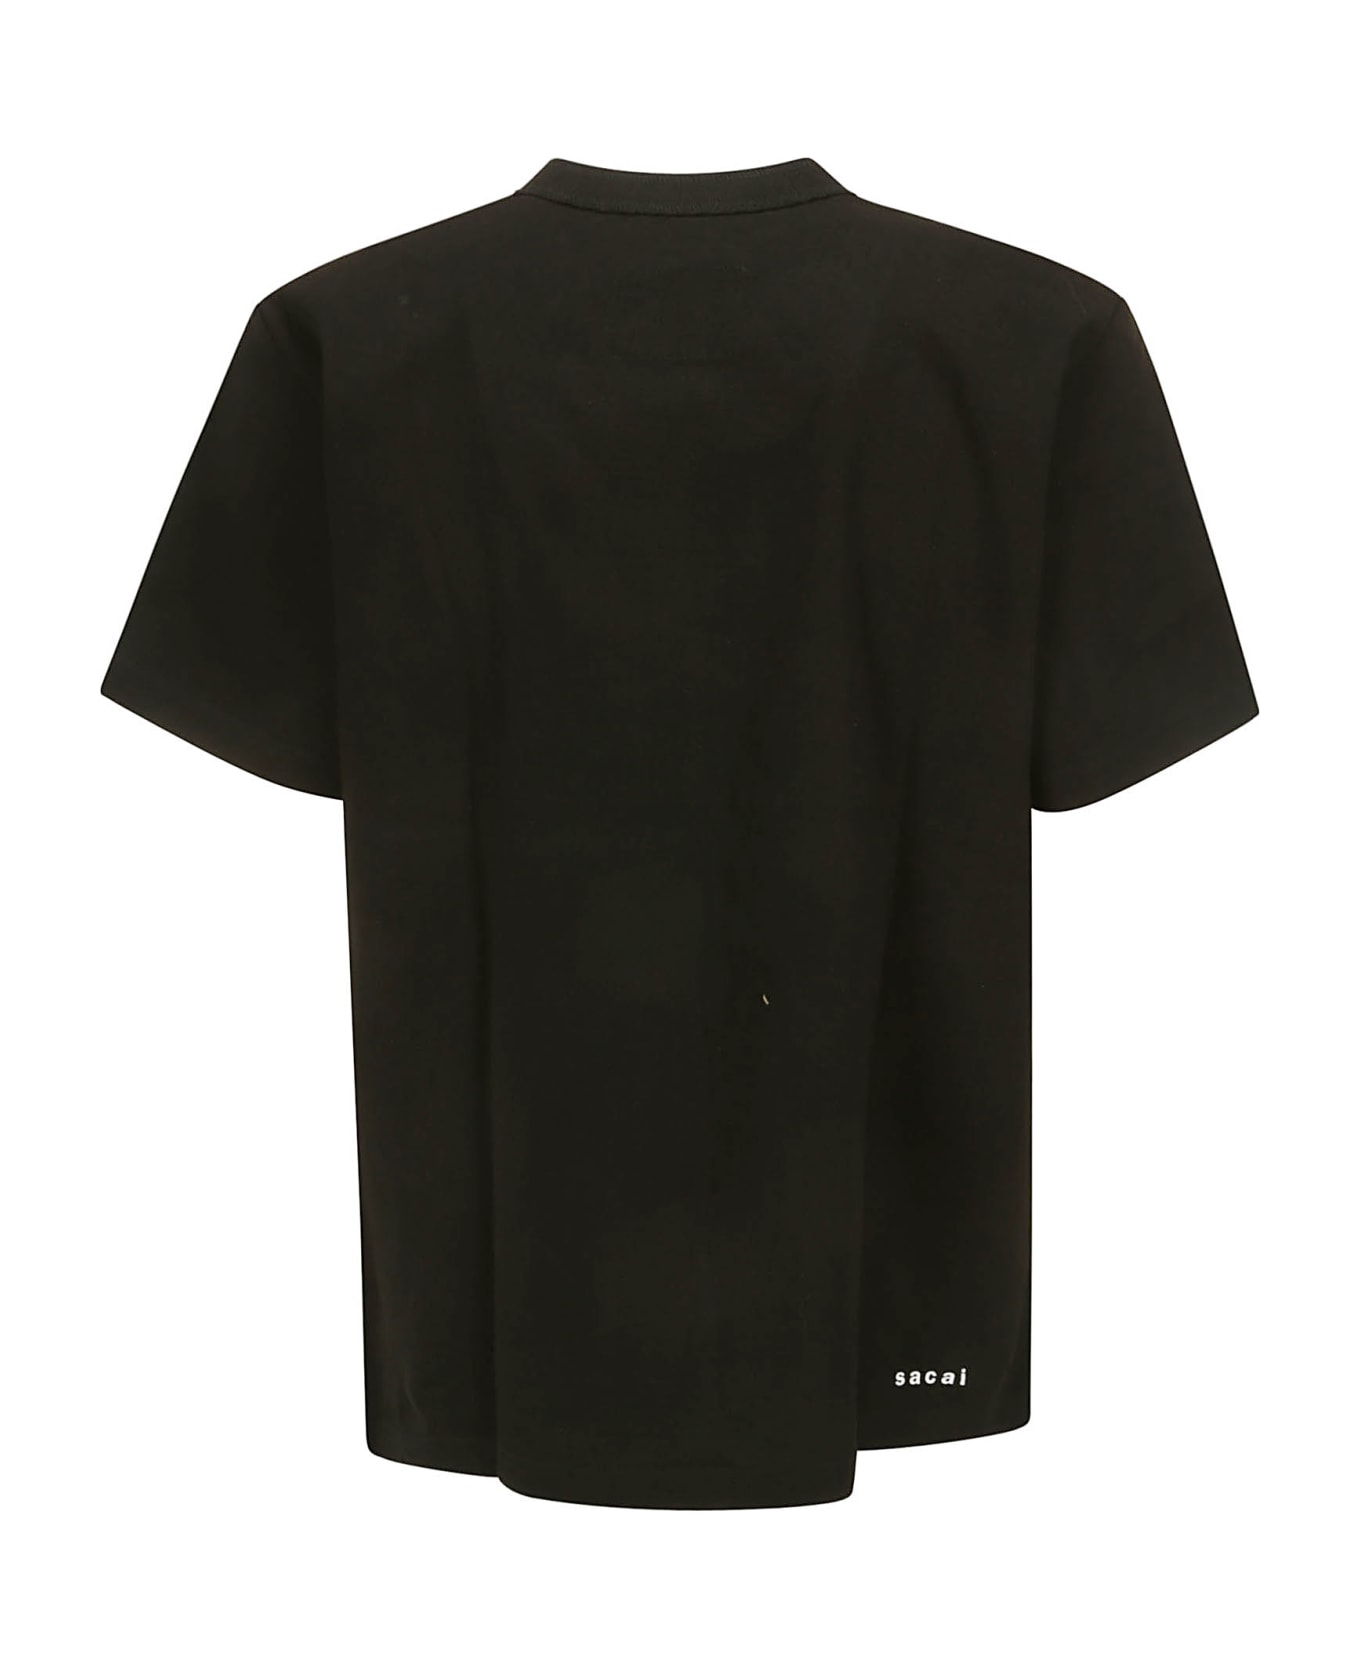 Sacai Know Future T-shirt - BLACK シャツ